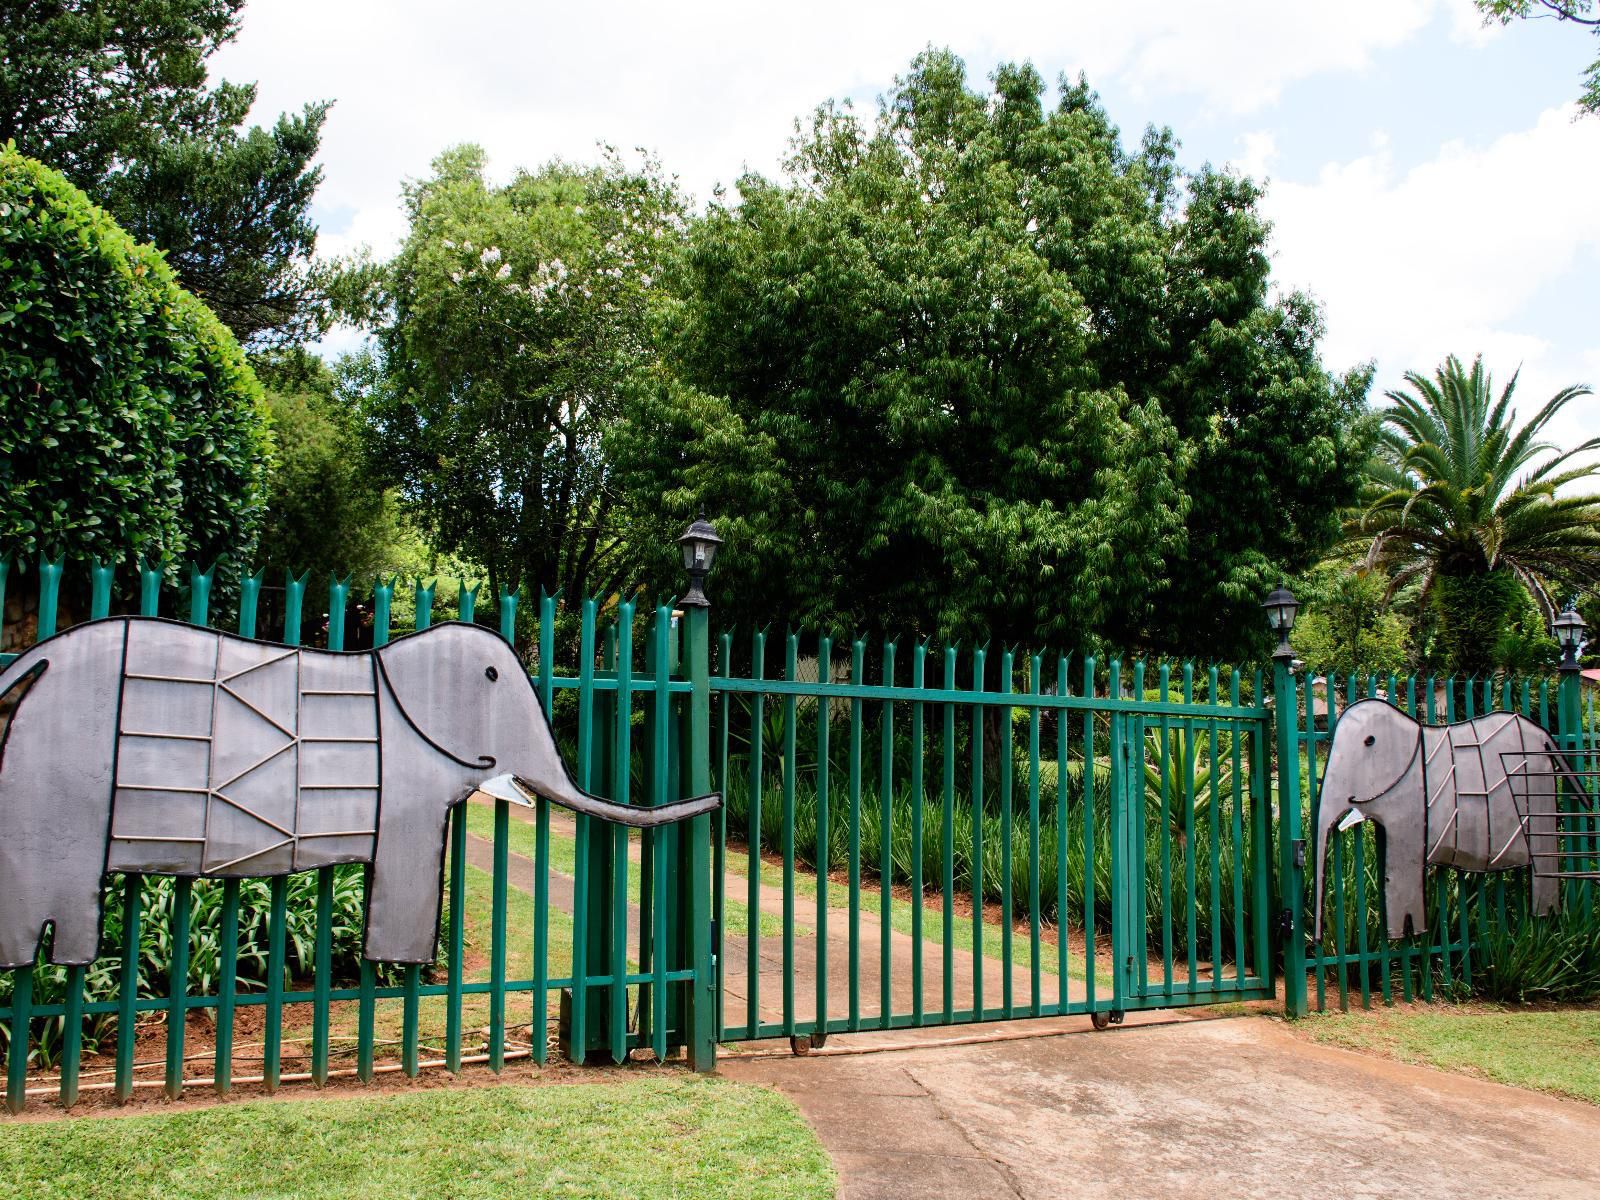 At Wayfarers Sabie Mpumalanga South Africa Gate, Architecture